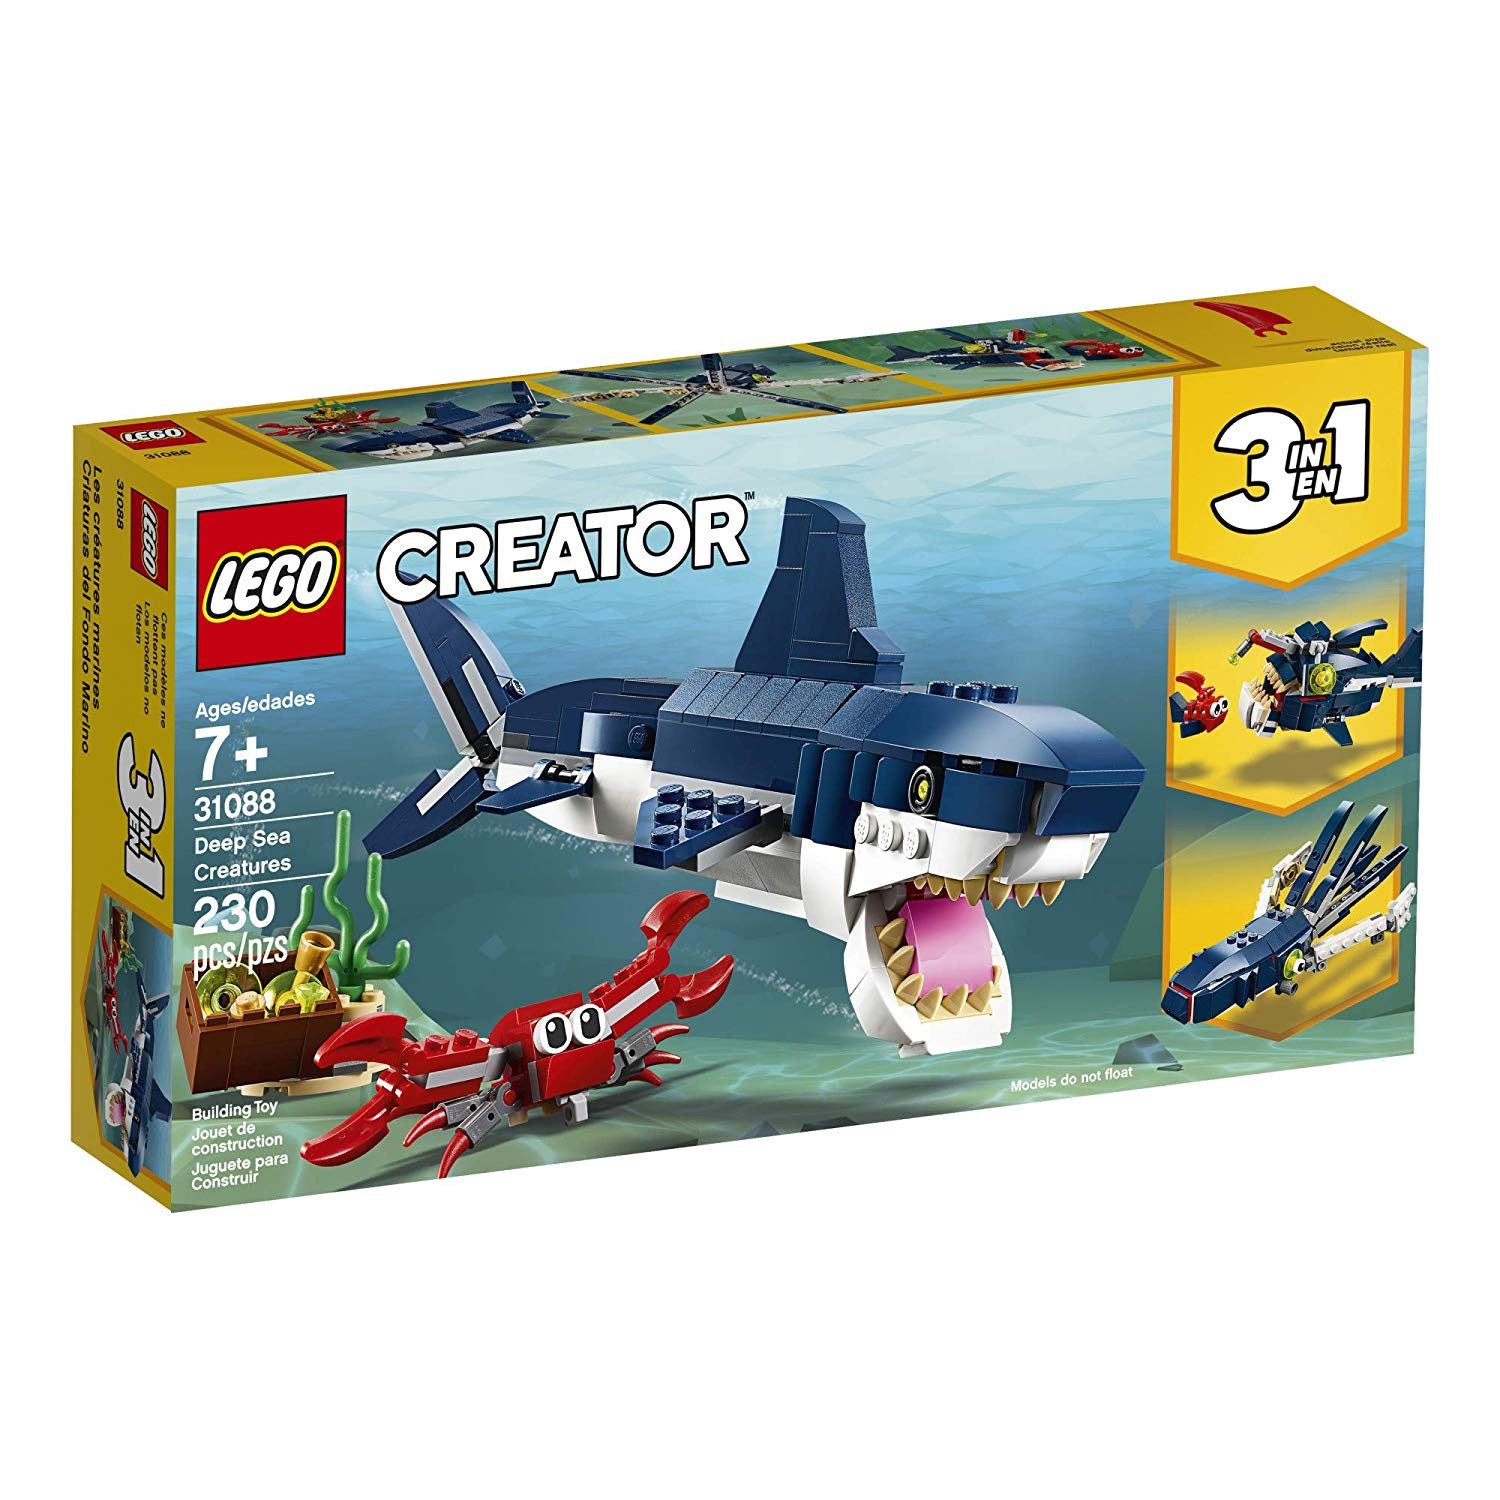 Lego Creator / Deep Sea Creatures 31088